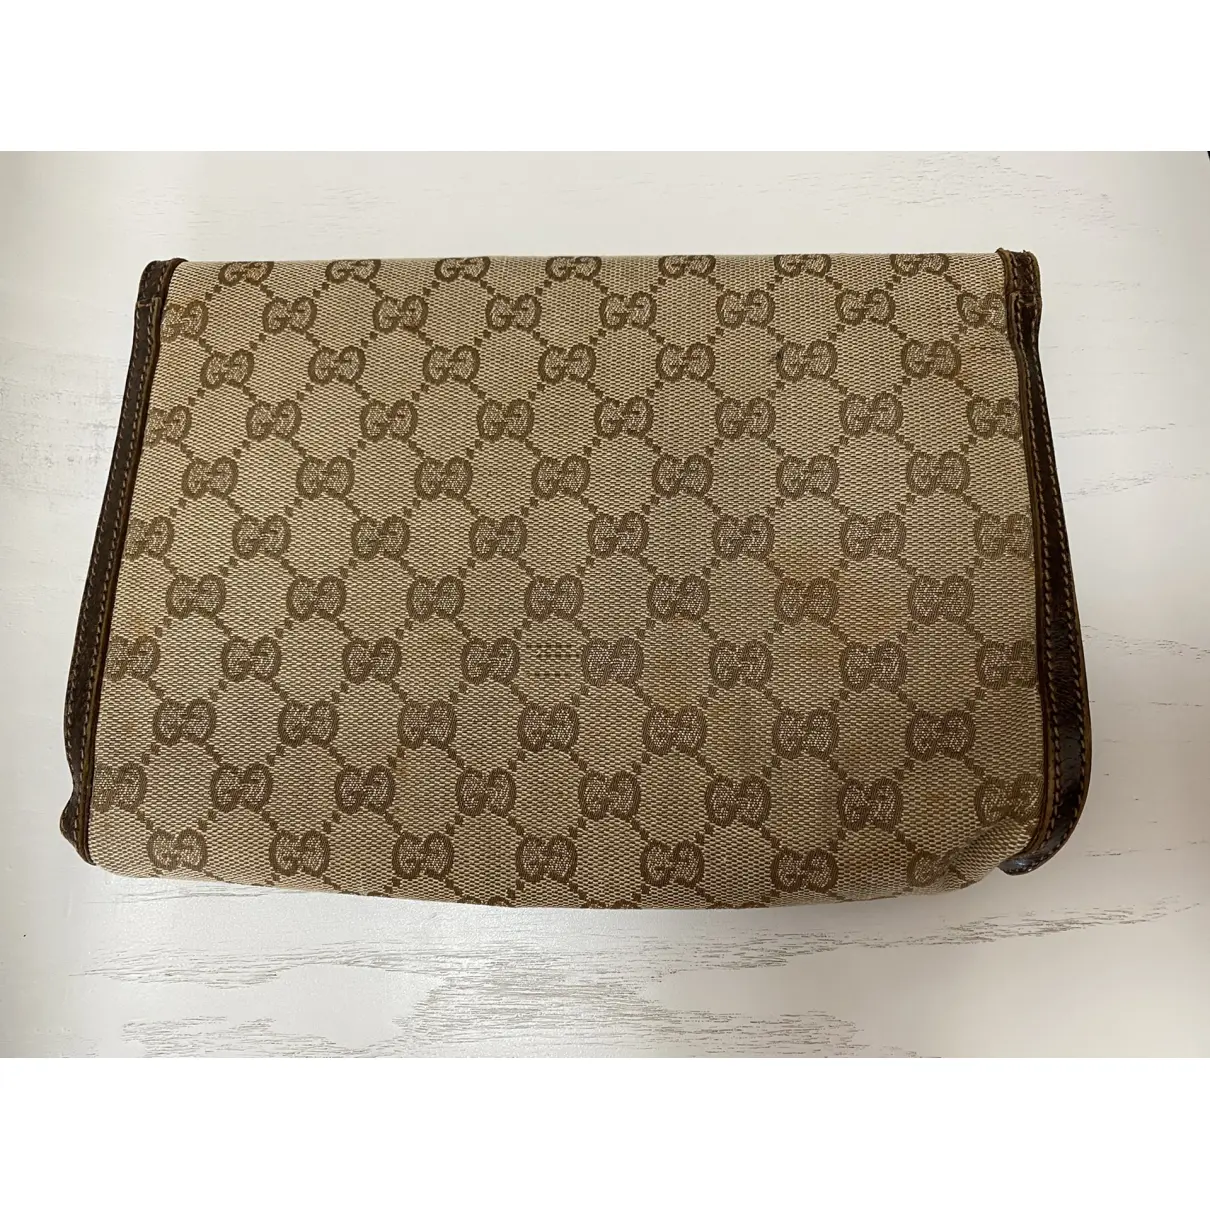 Buy Gucci Interlocking leather clutch bag online